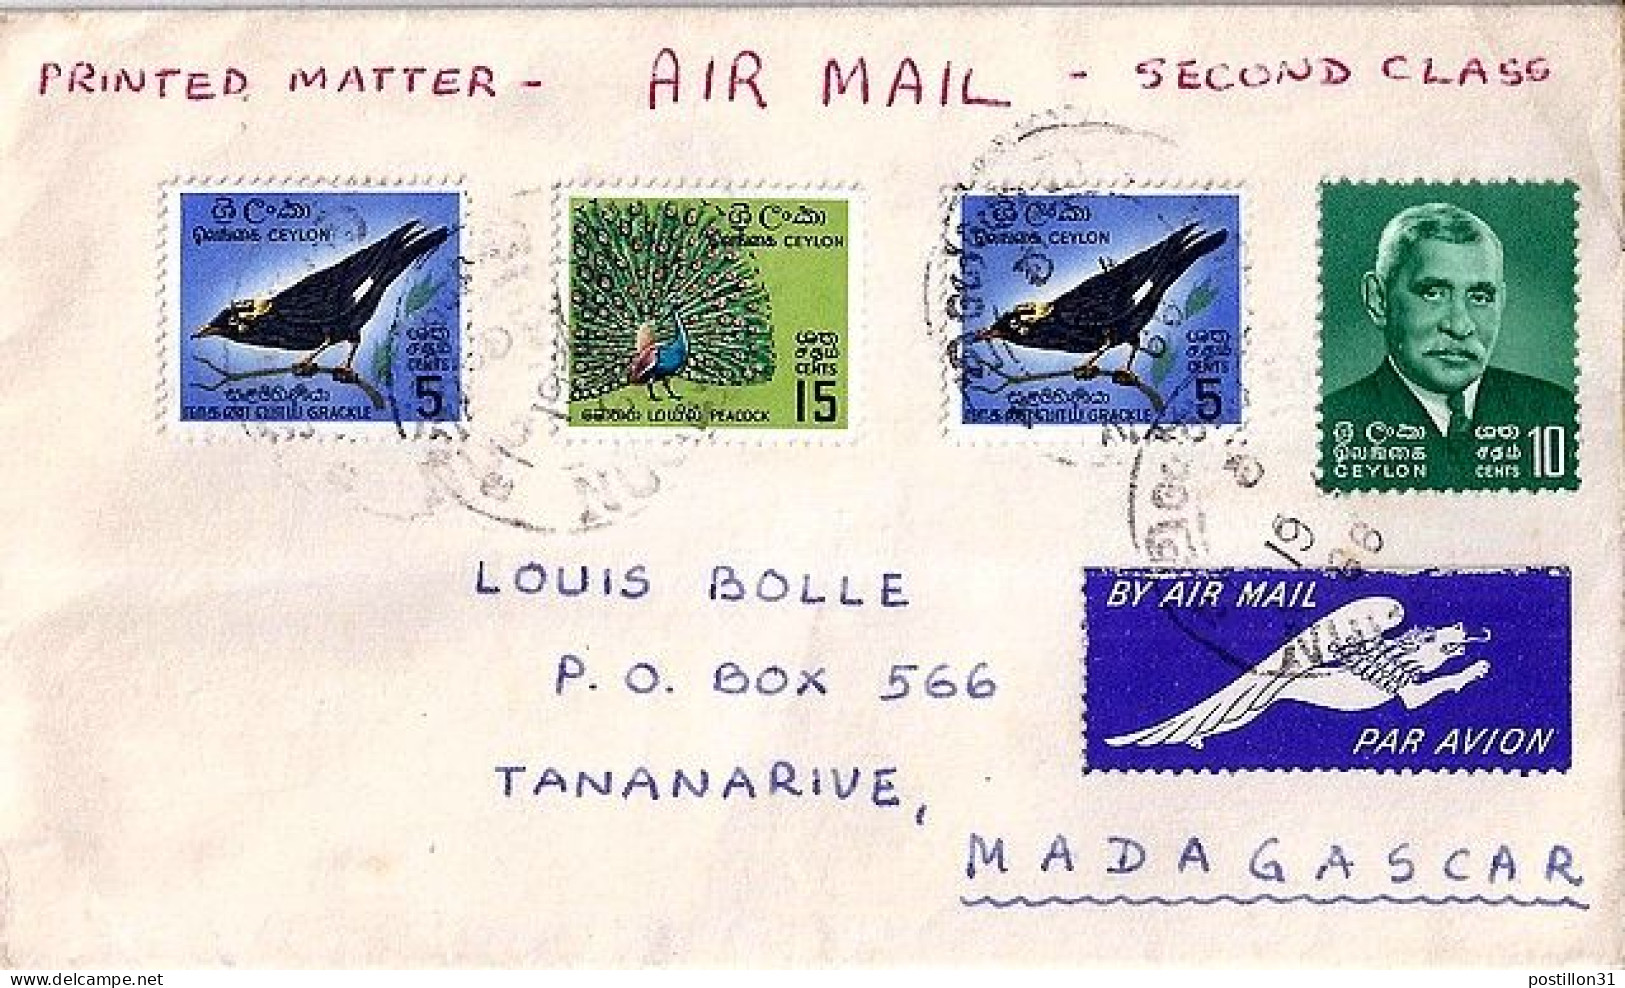 CEYLAN N° 362/358x2/359 S/L. DE COLOMBO/19.4.66 POUR MADAGASCAR - Sri Lanka (Ceylan) (1948-...)